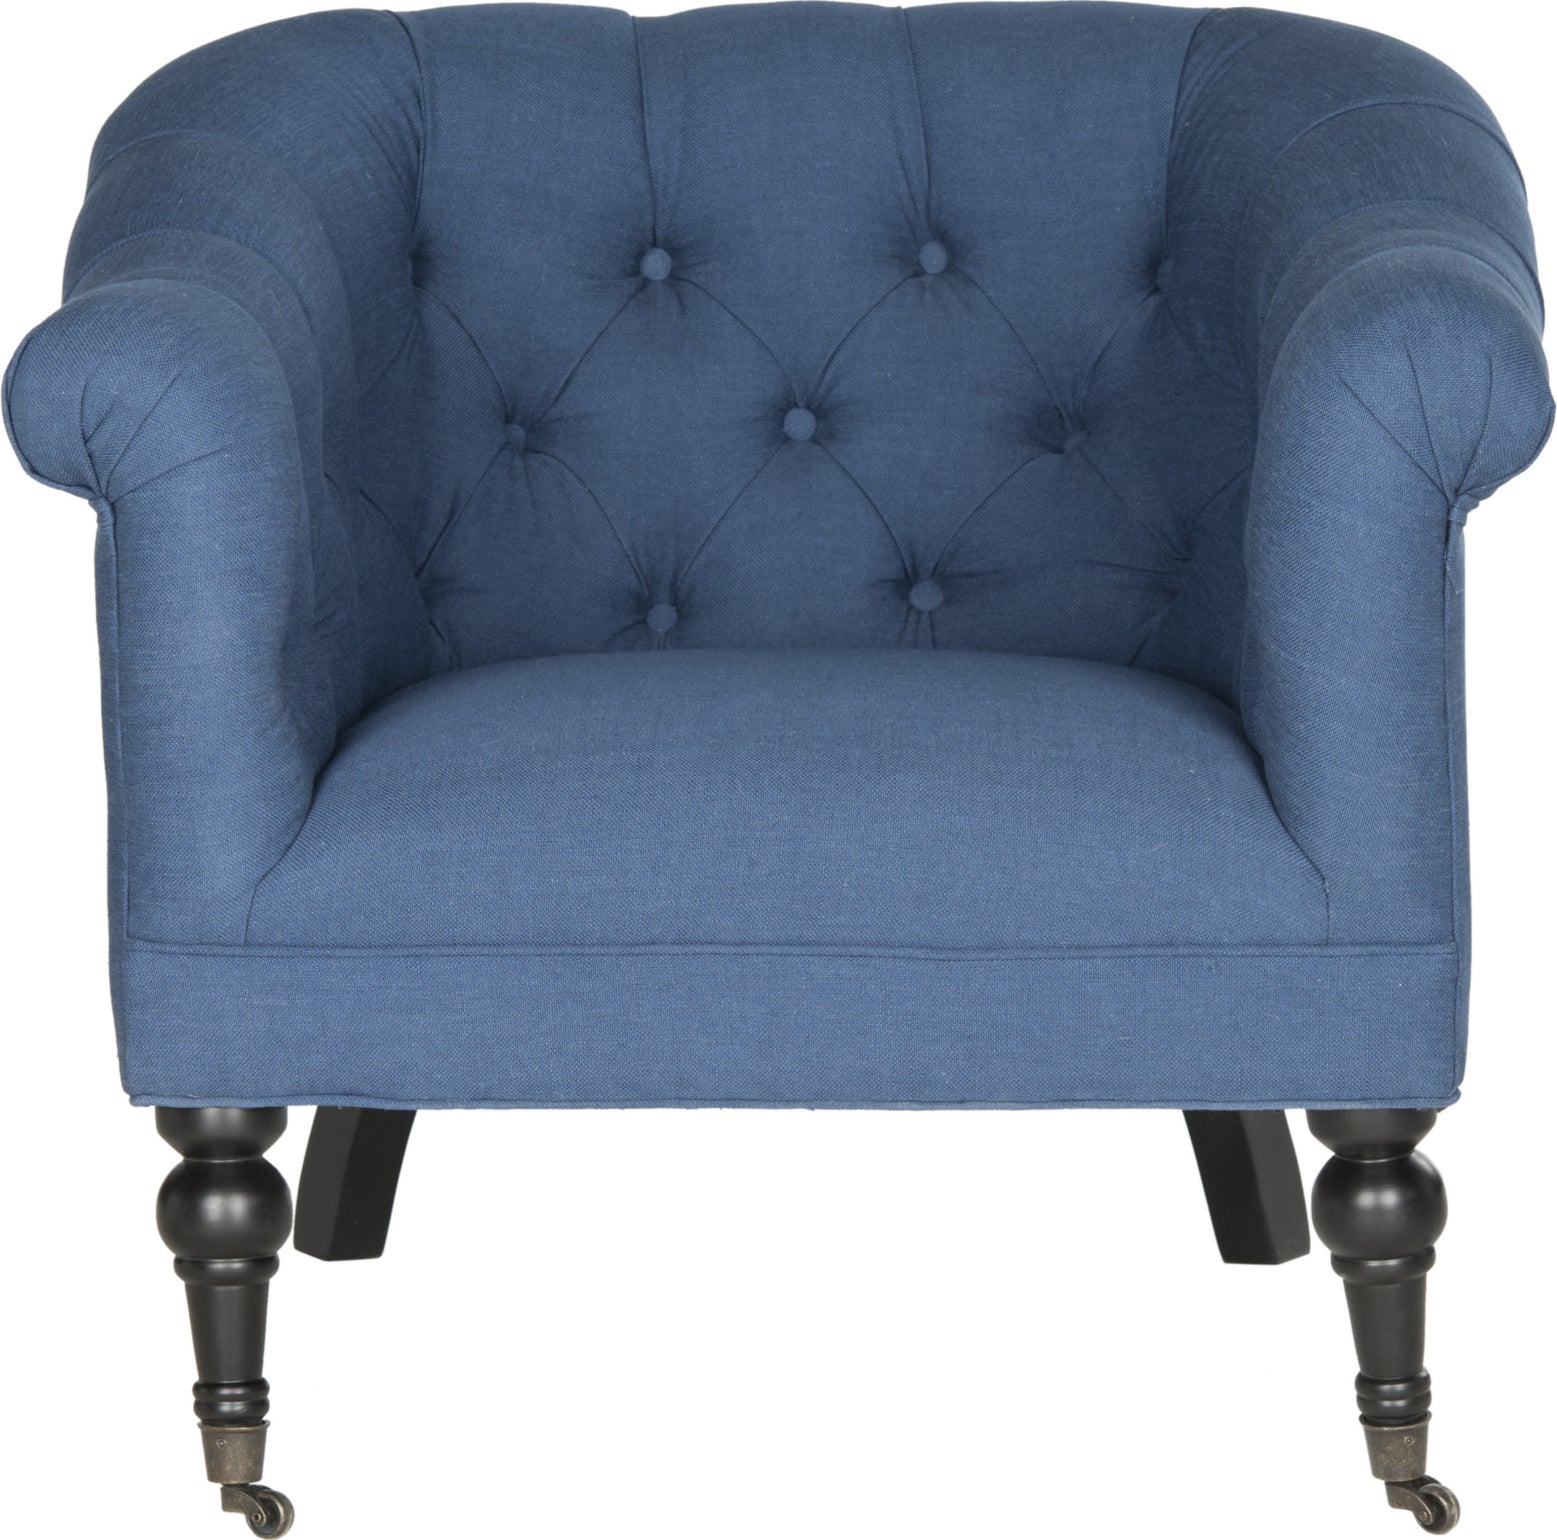 Safavieh Nicolas Tufted Club Chair Steel Blue and Black Furniture main image